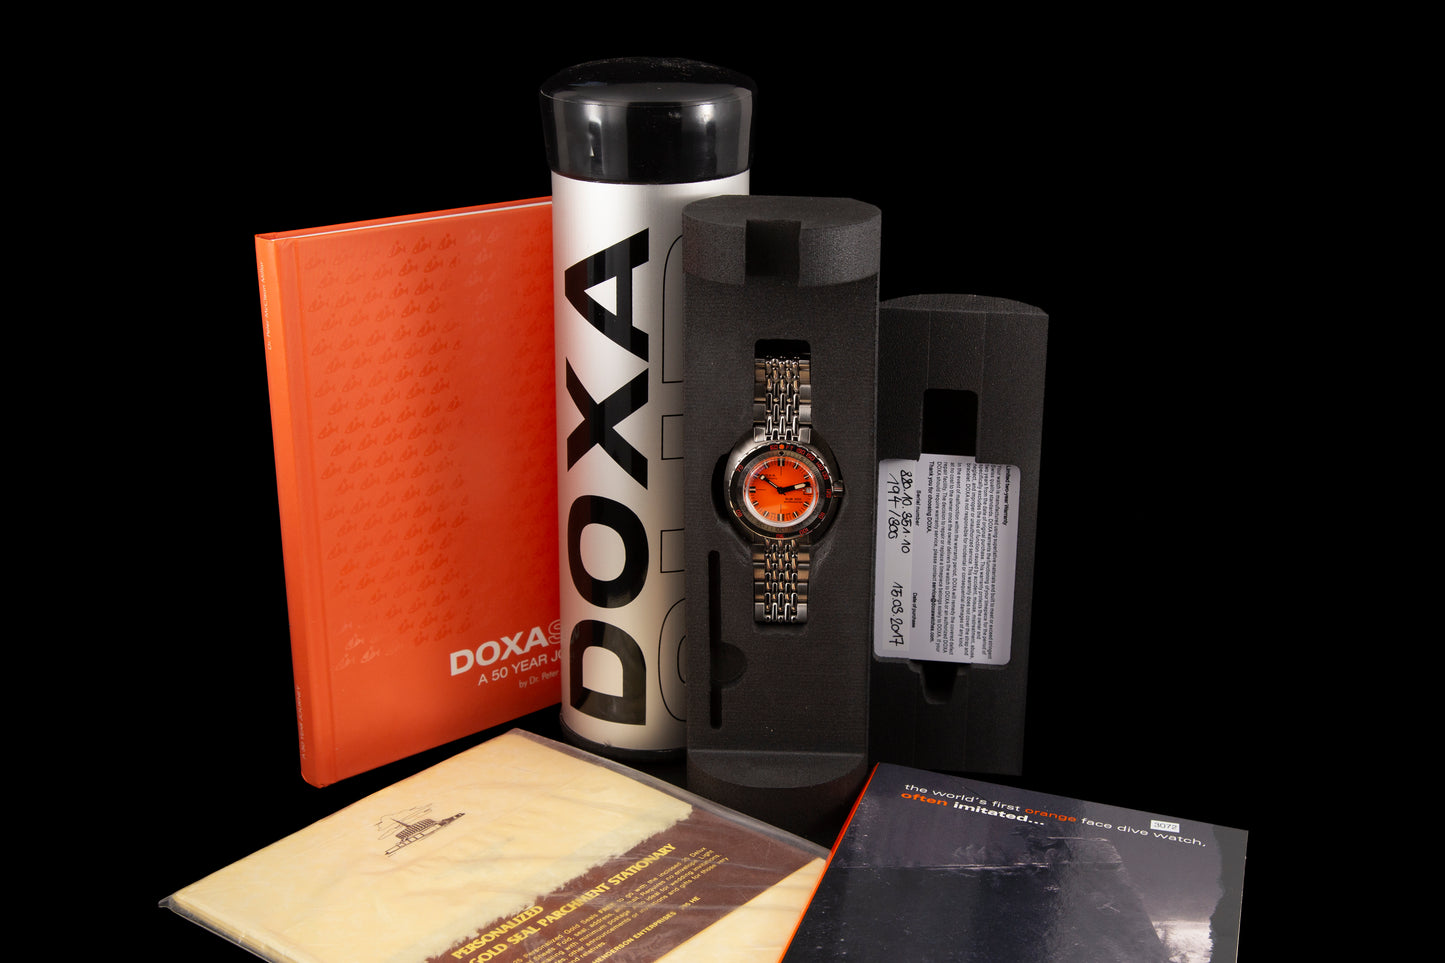 DOXA Sub 300 Professional 50th Anniversary Edition